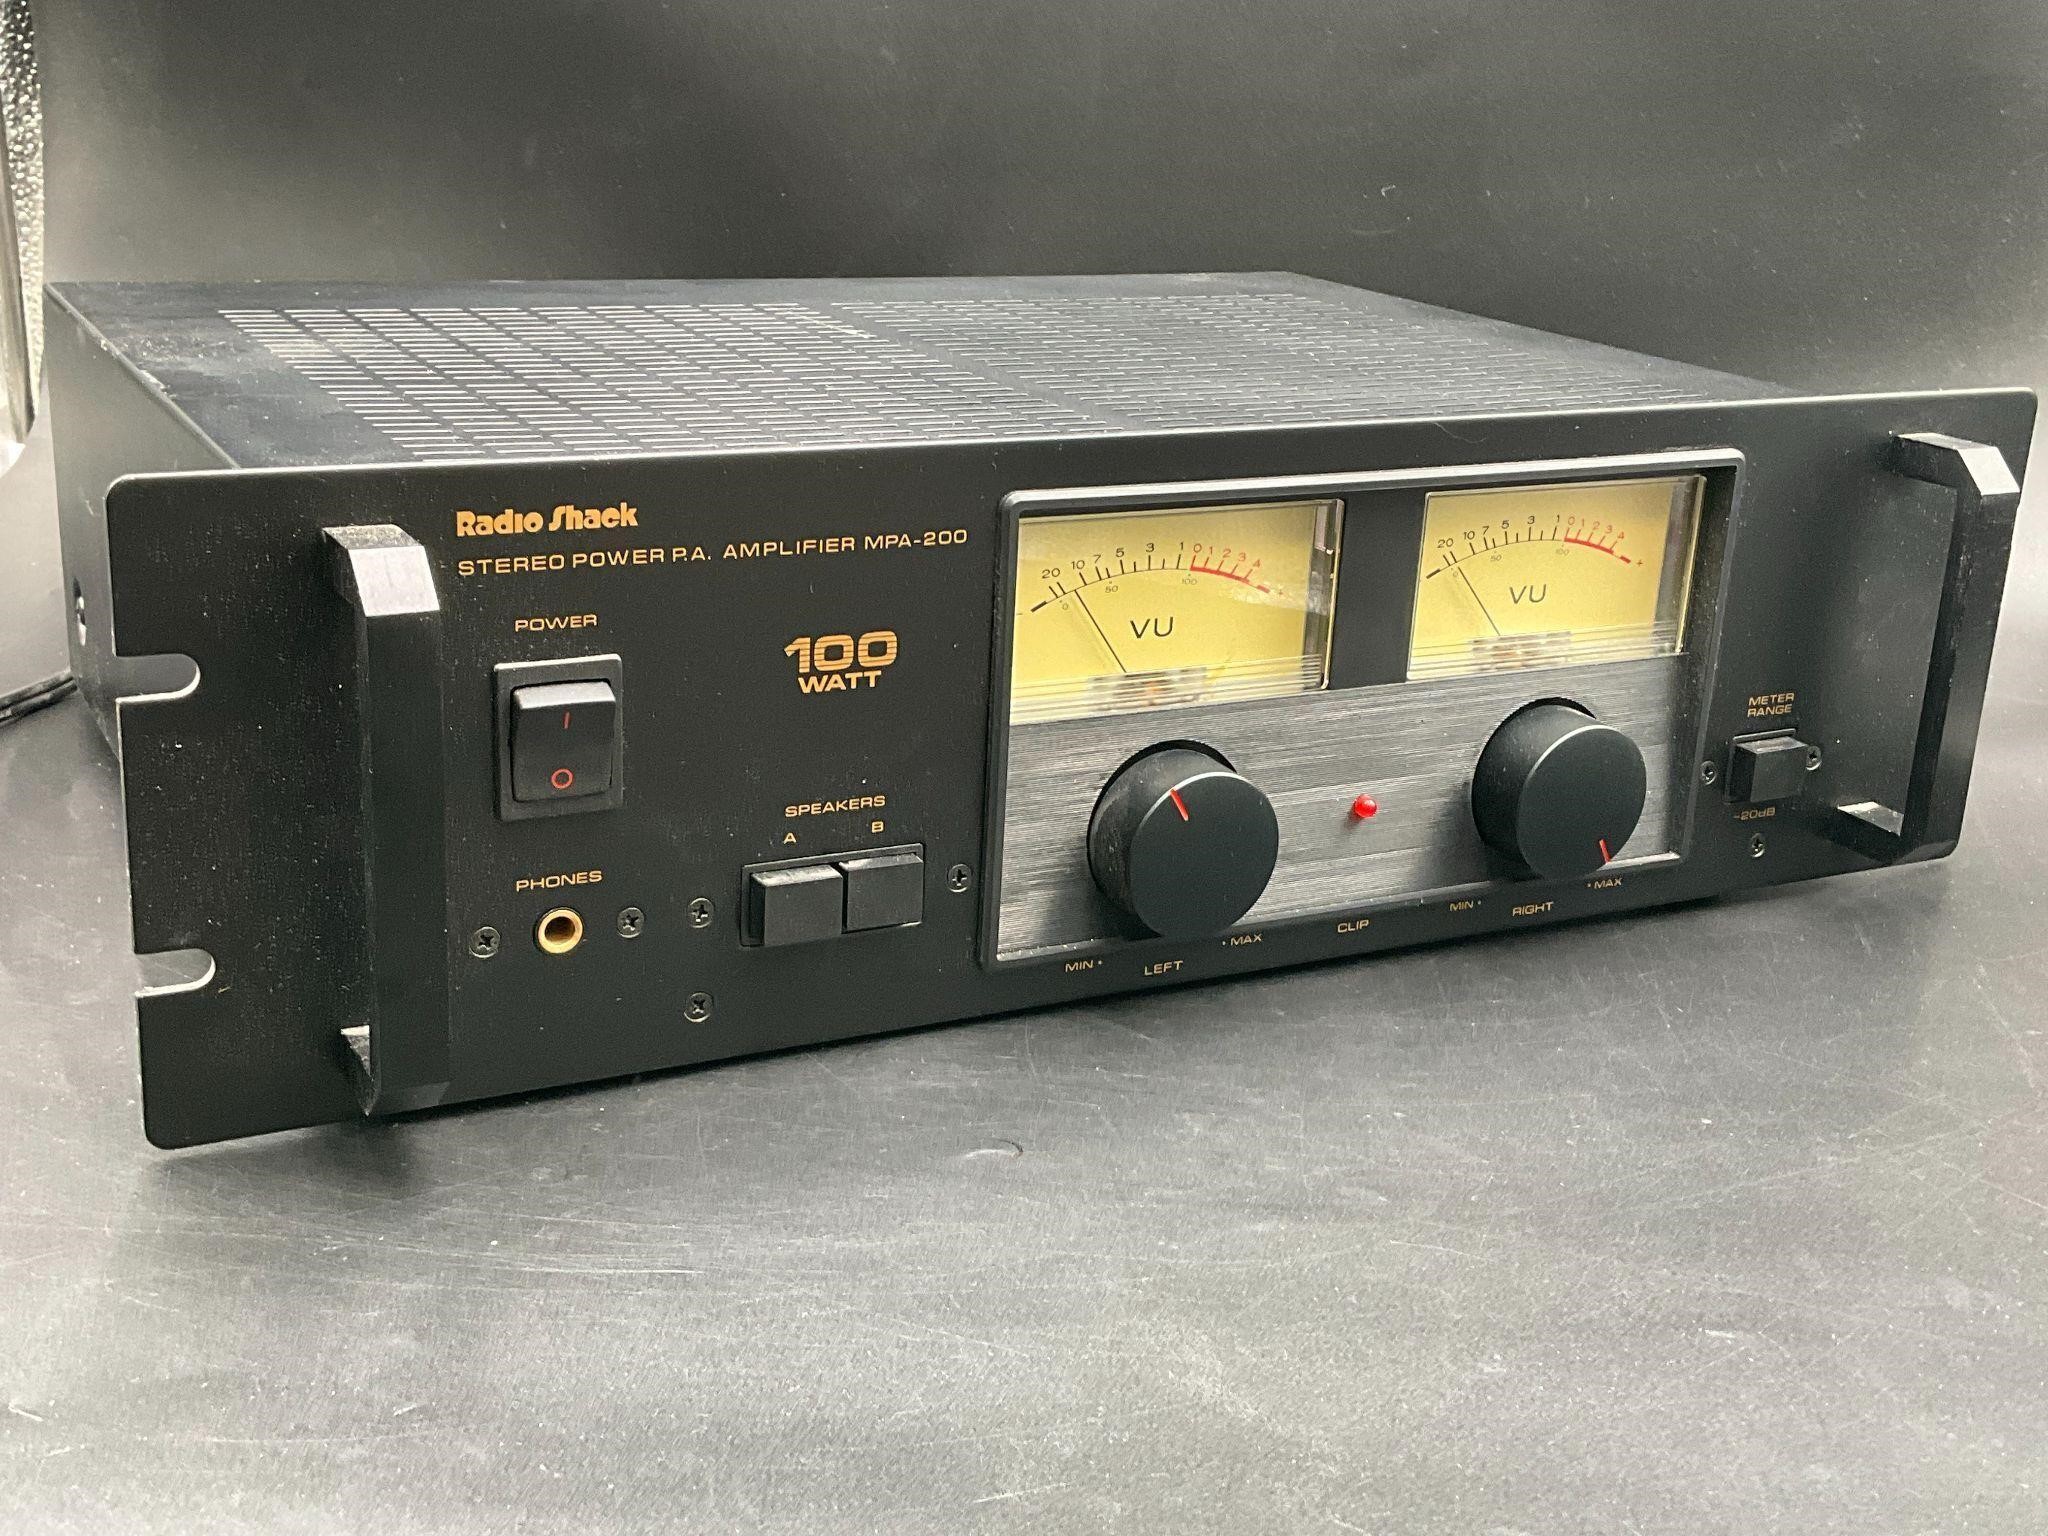 Radio Shack Stereo Power P.A. Amplifier MPA-200